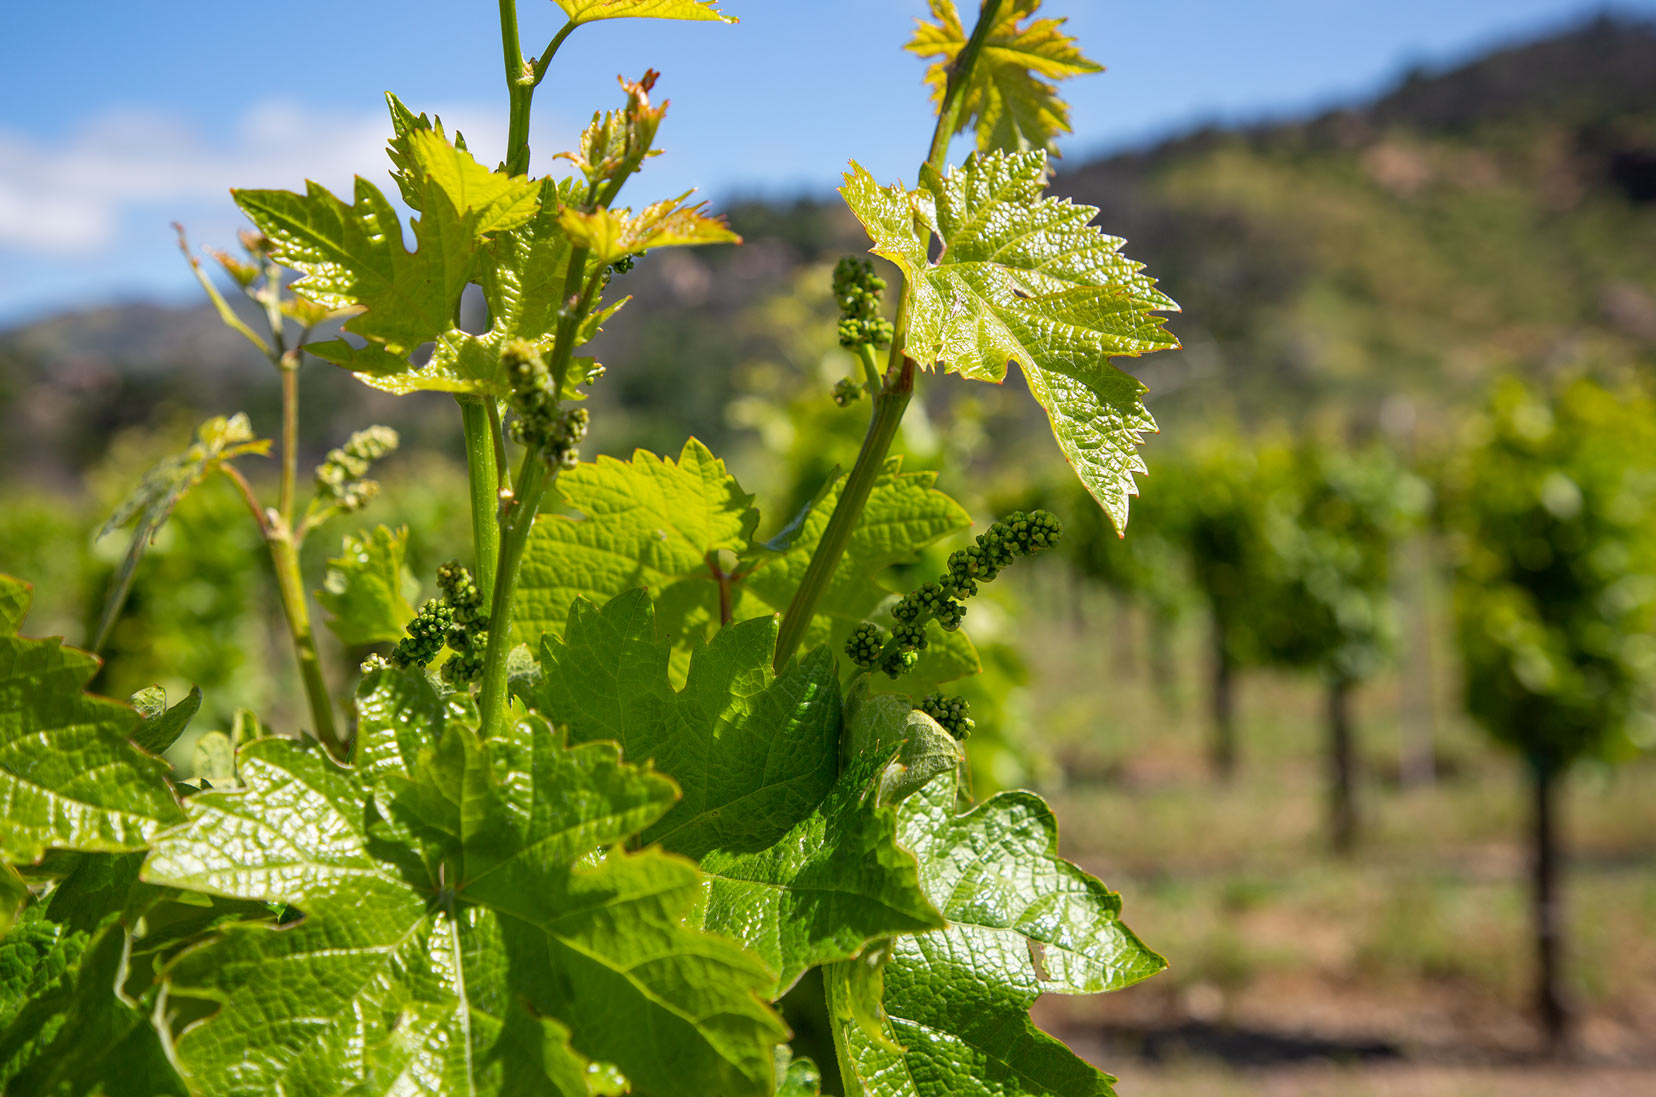 Closeup of wine vineyard in Spring showing small berries